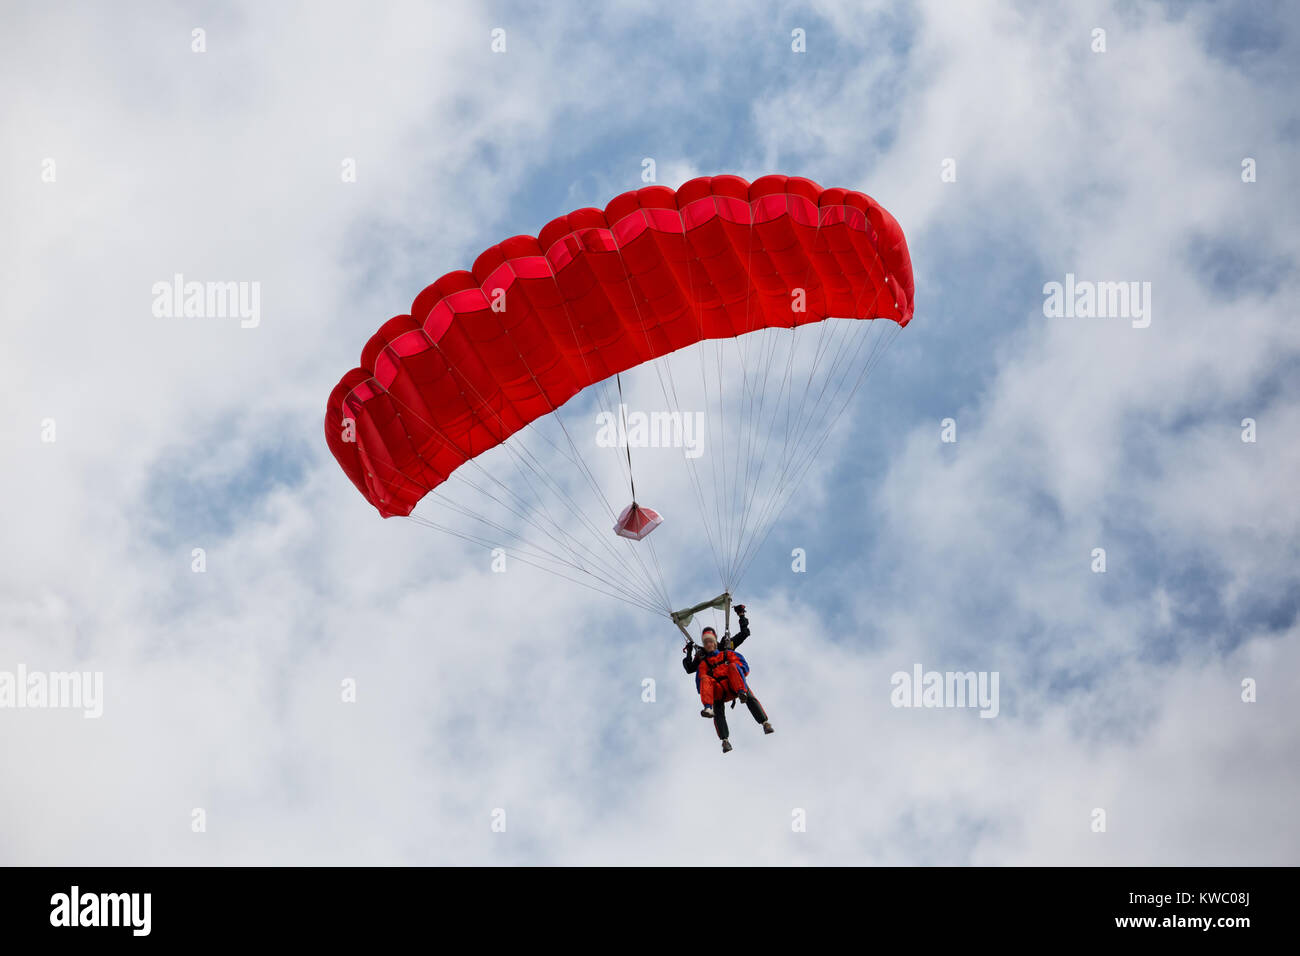 Parachuter descendiendo con un paracaídas rojo Foto de stock